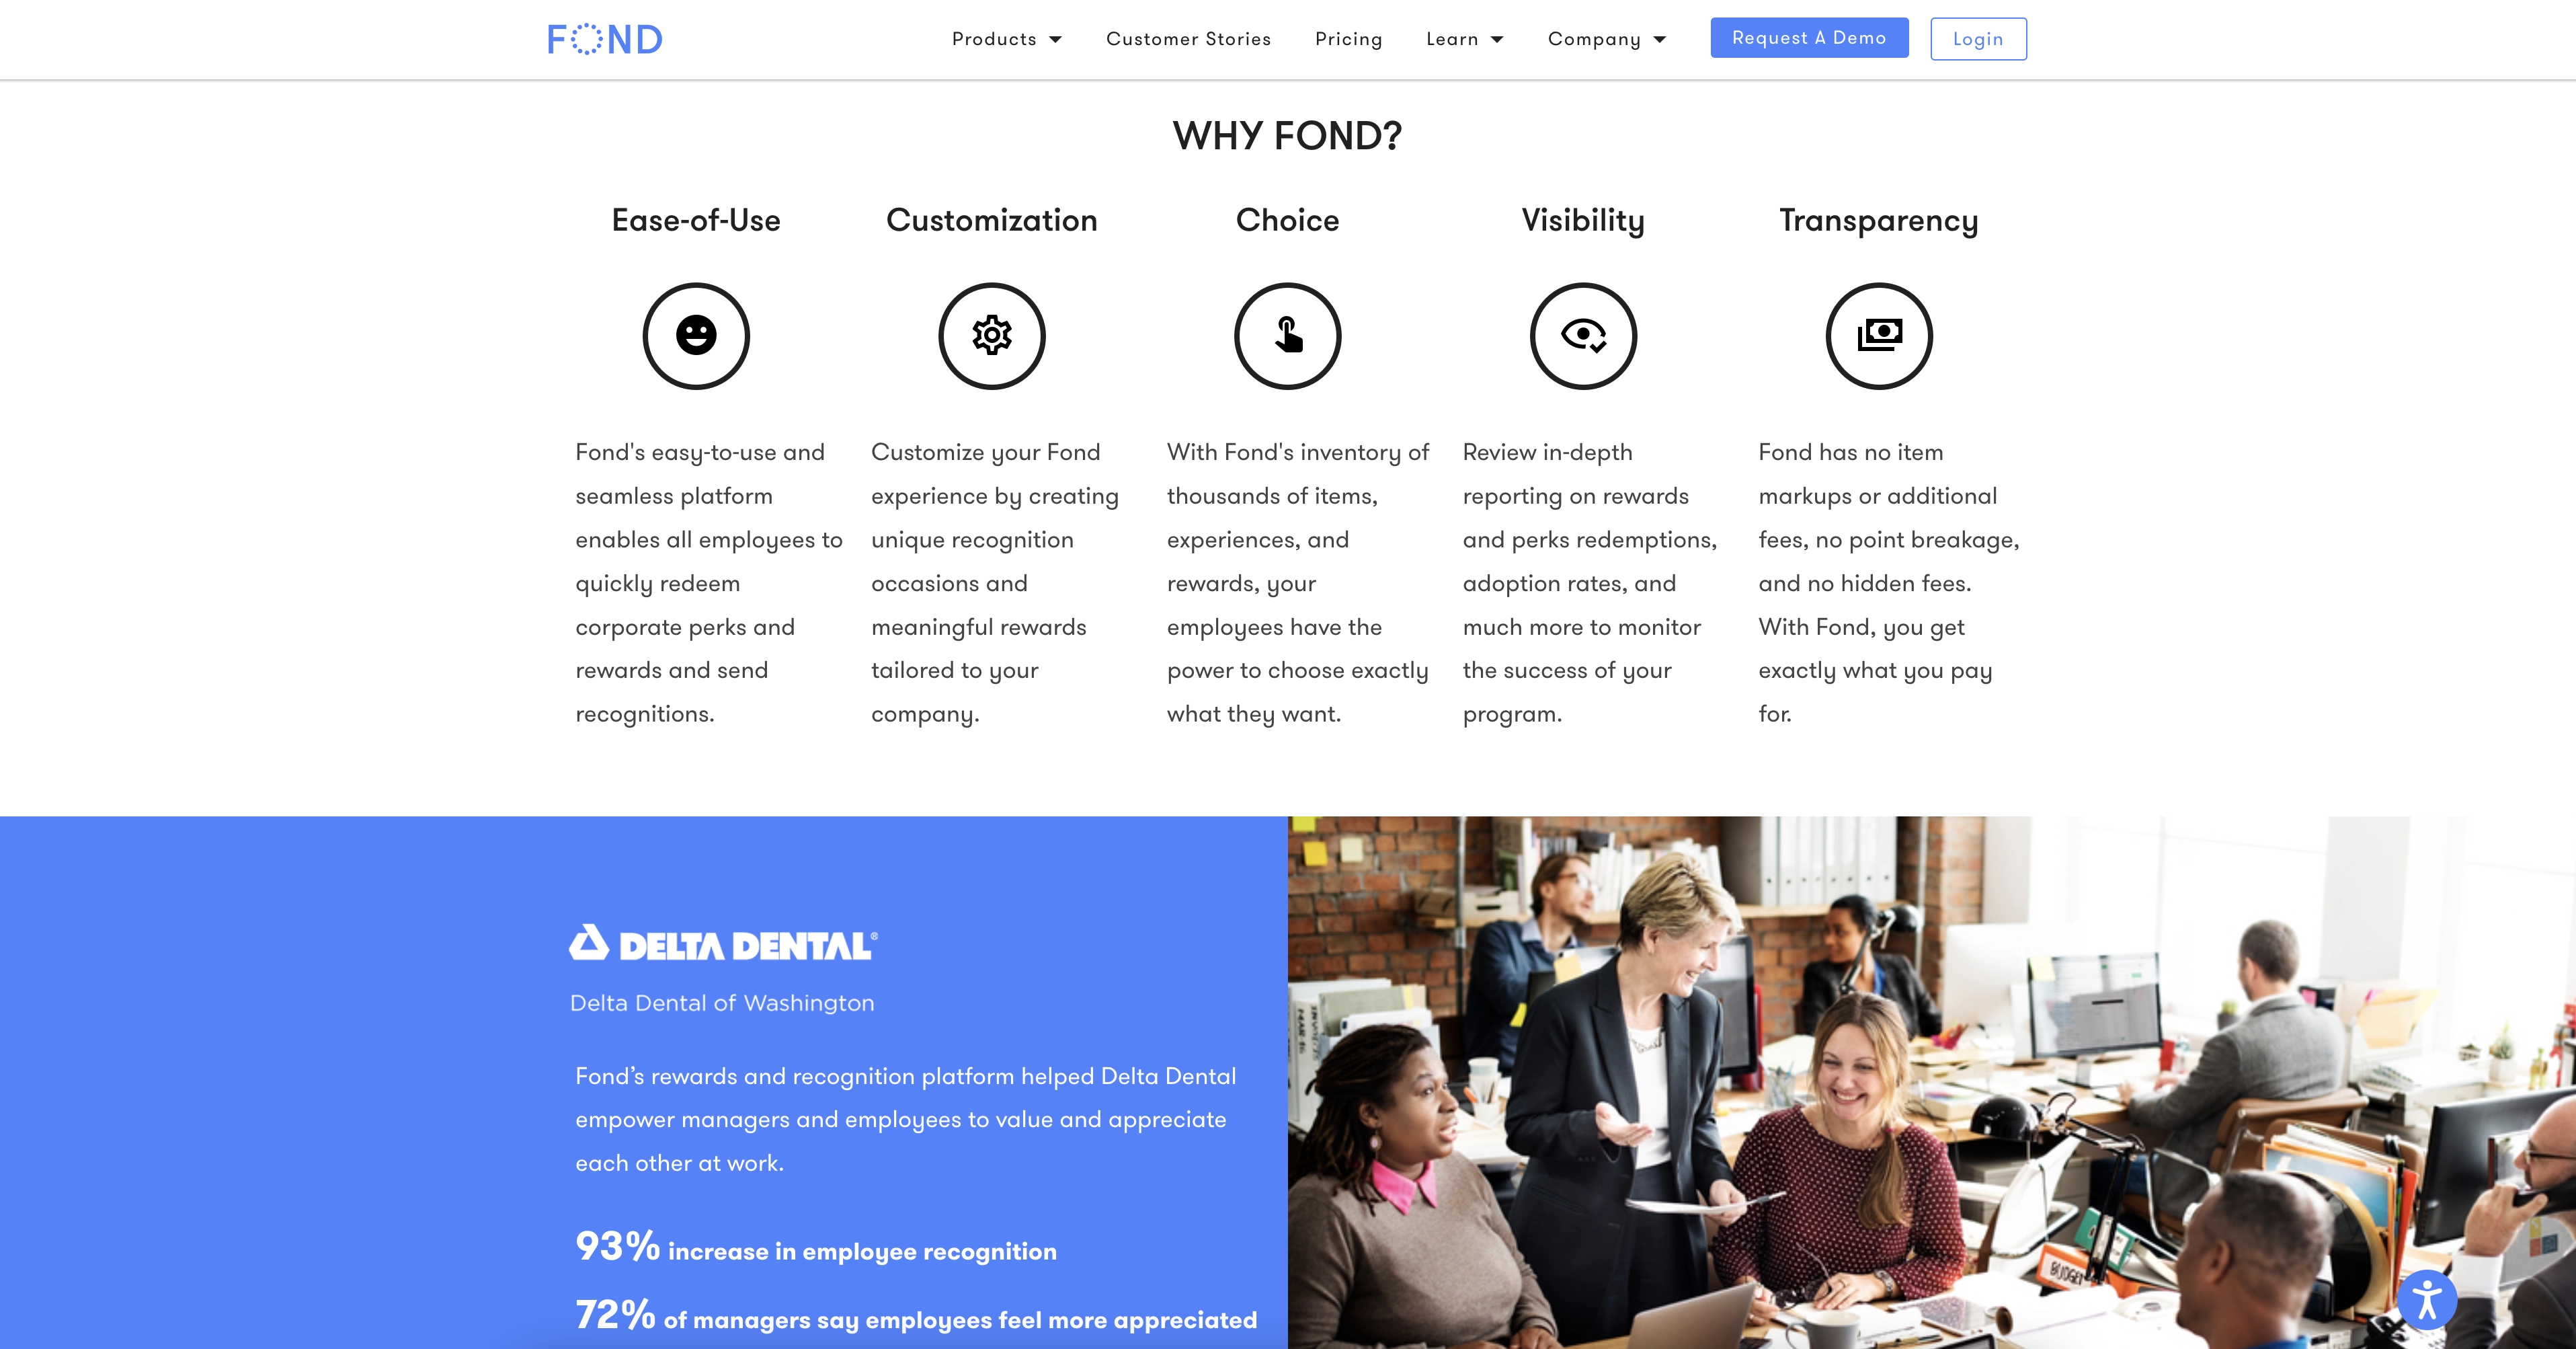 Fond employee recognition platform